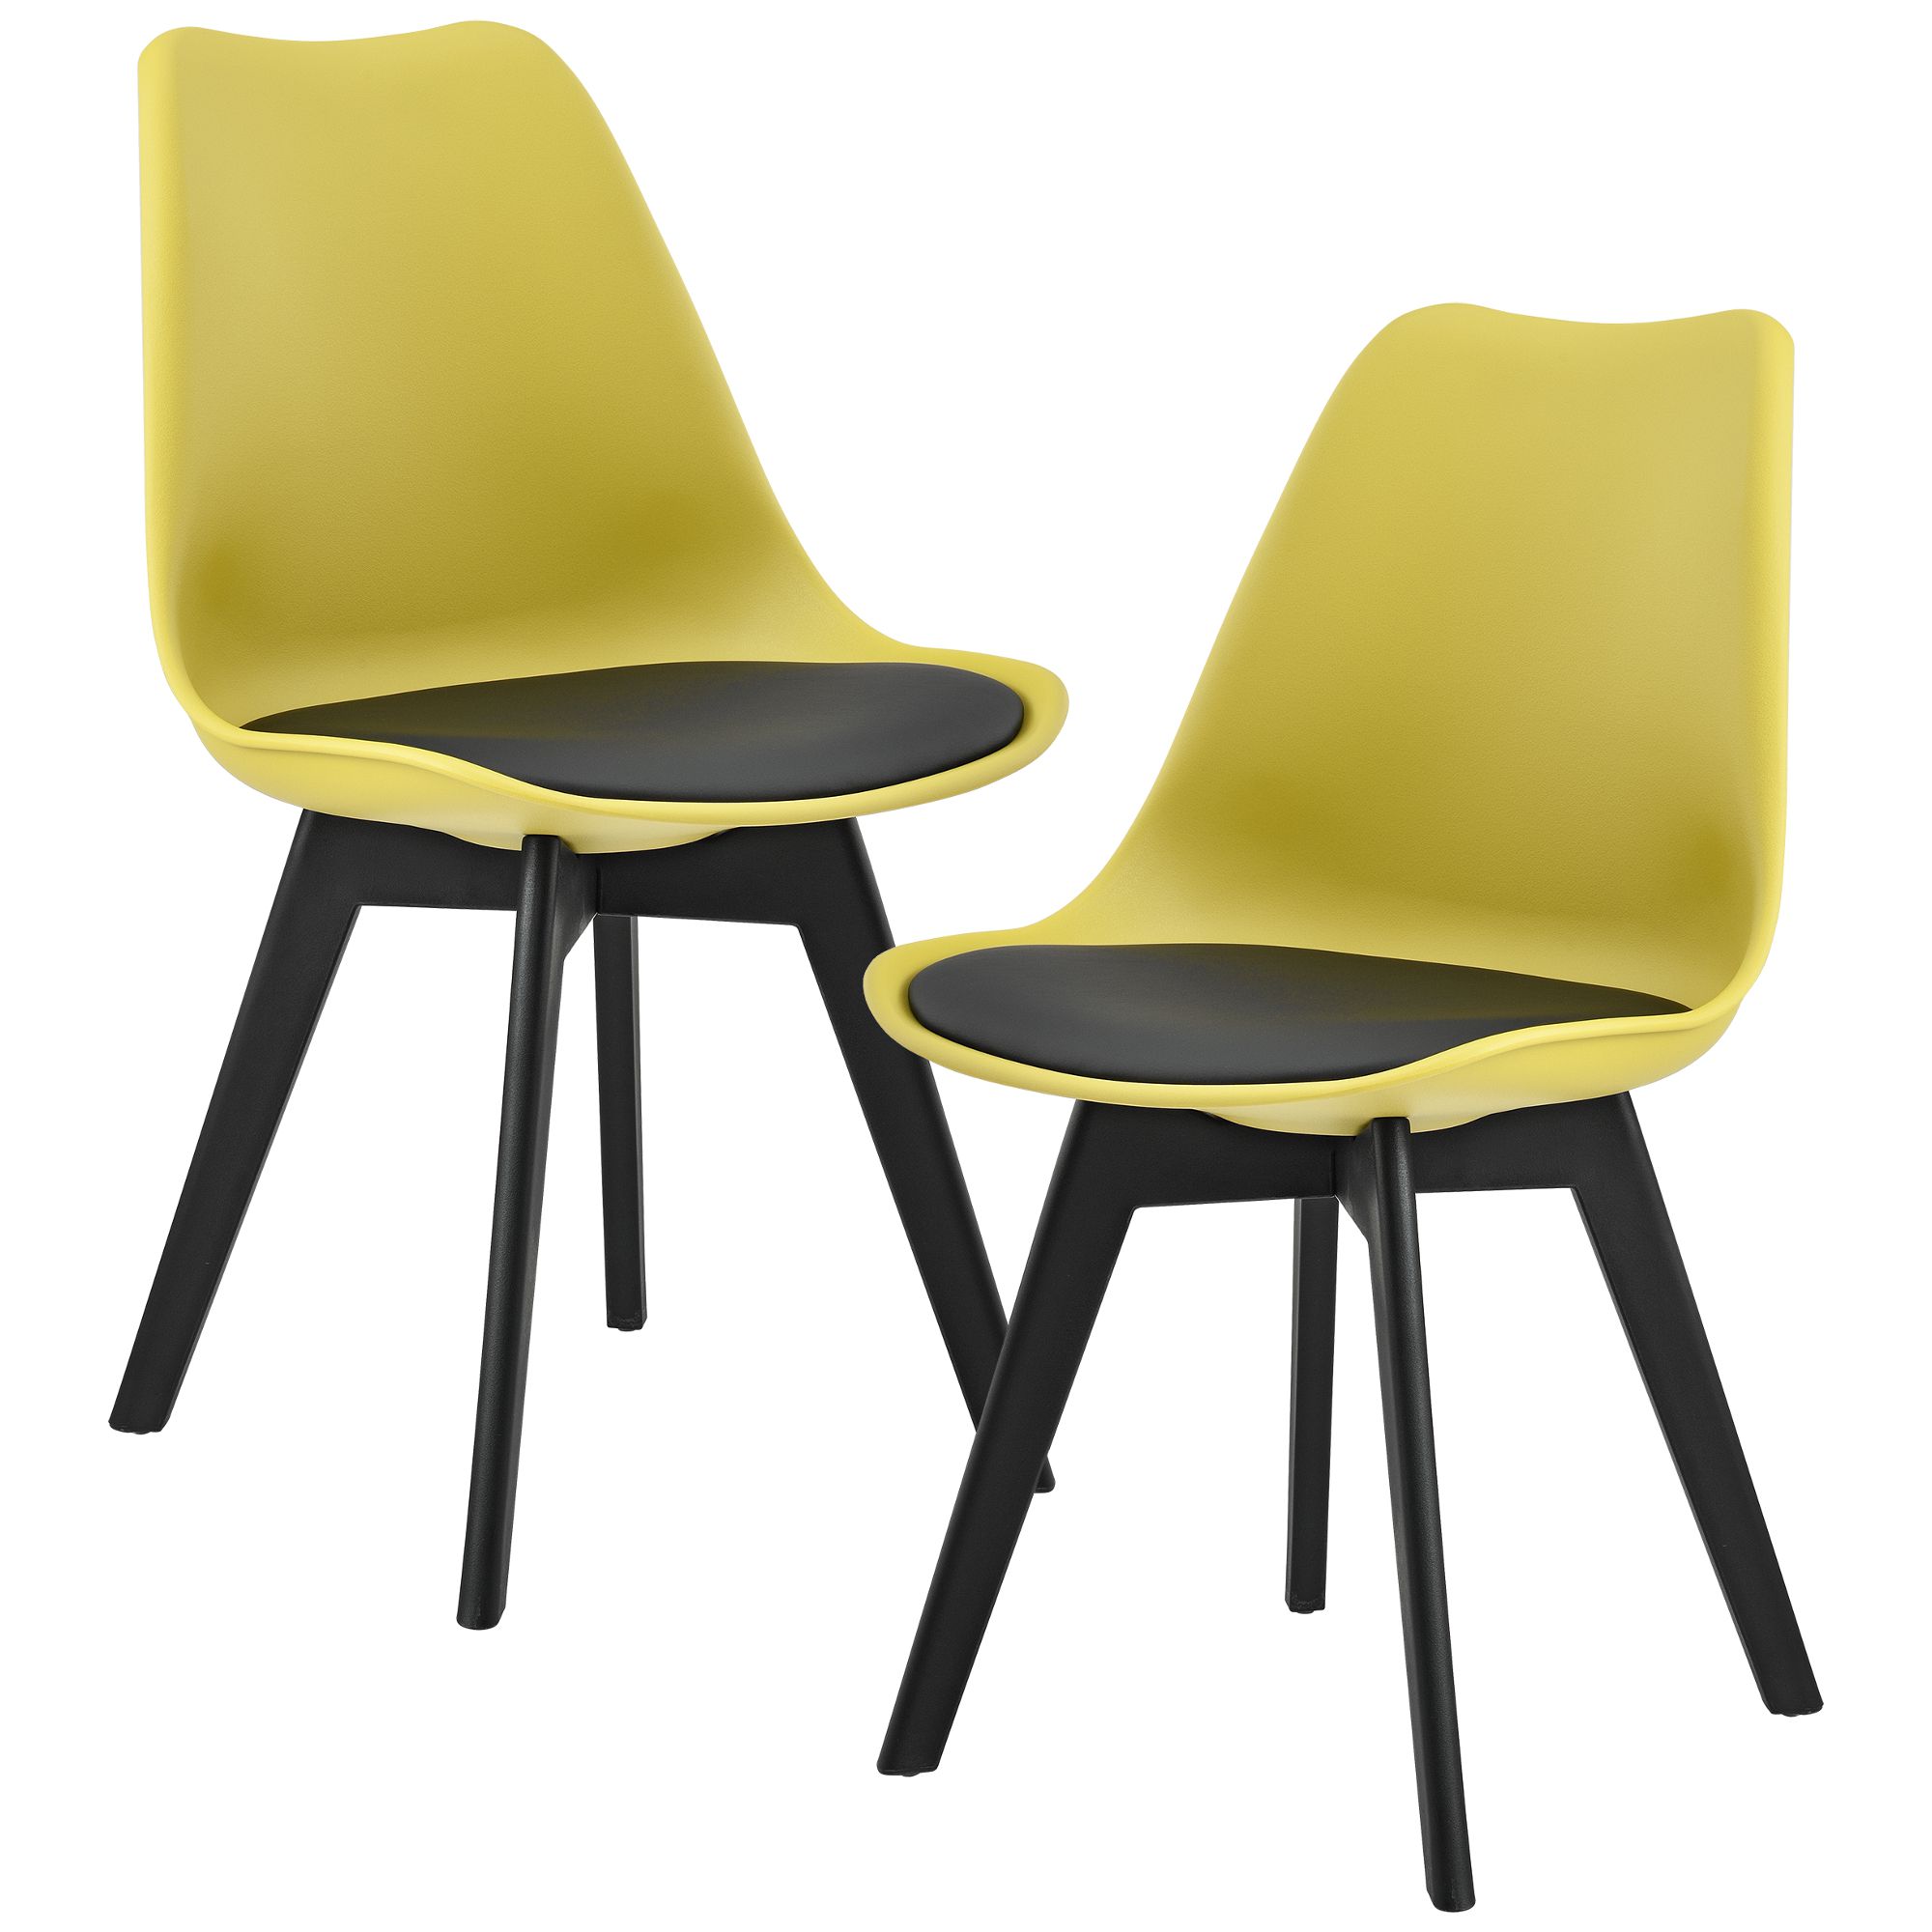 [en.casa] Sada židlí HTMS-2858 - H.T. Trade Service GmbH & Co. KG